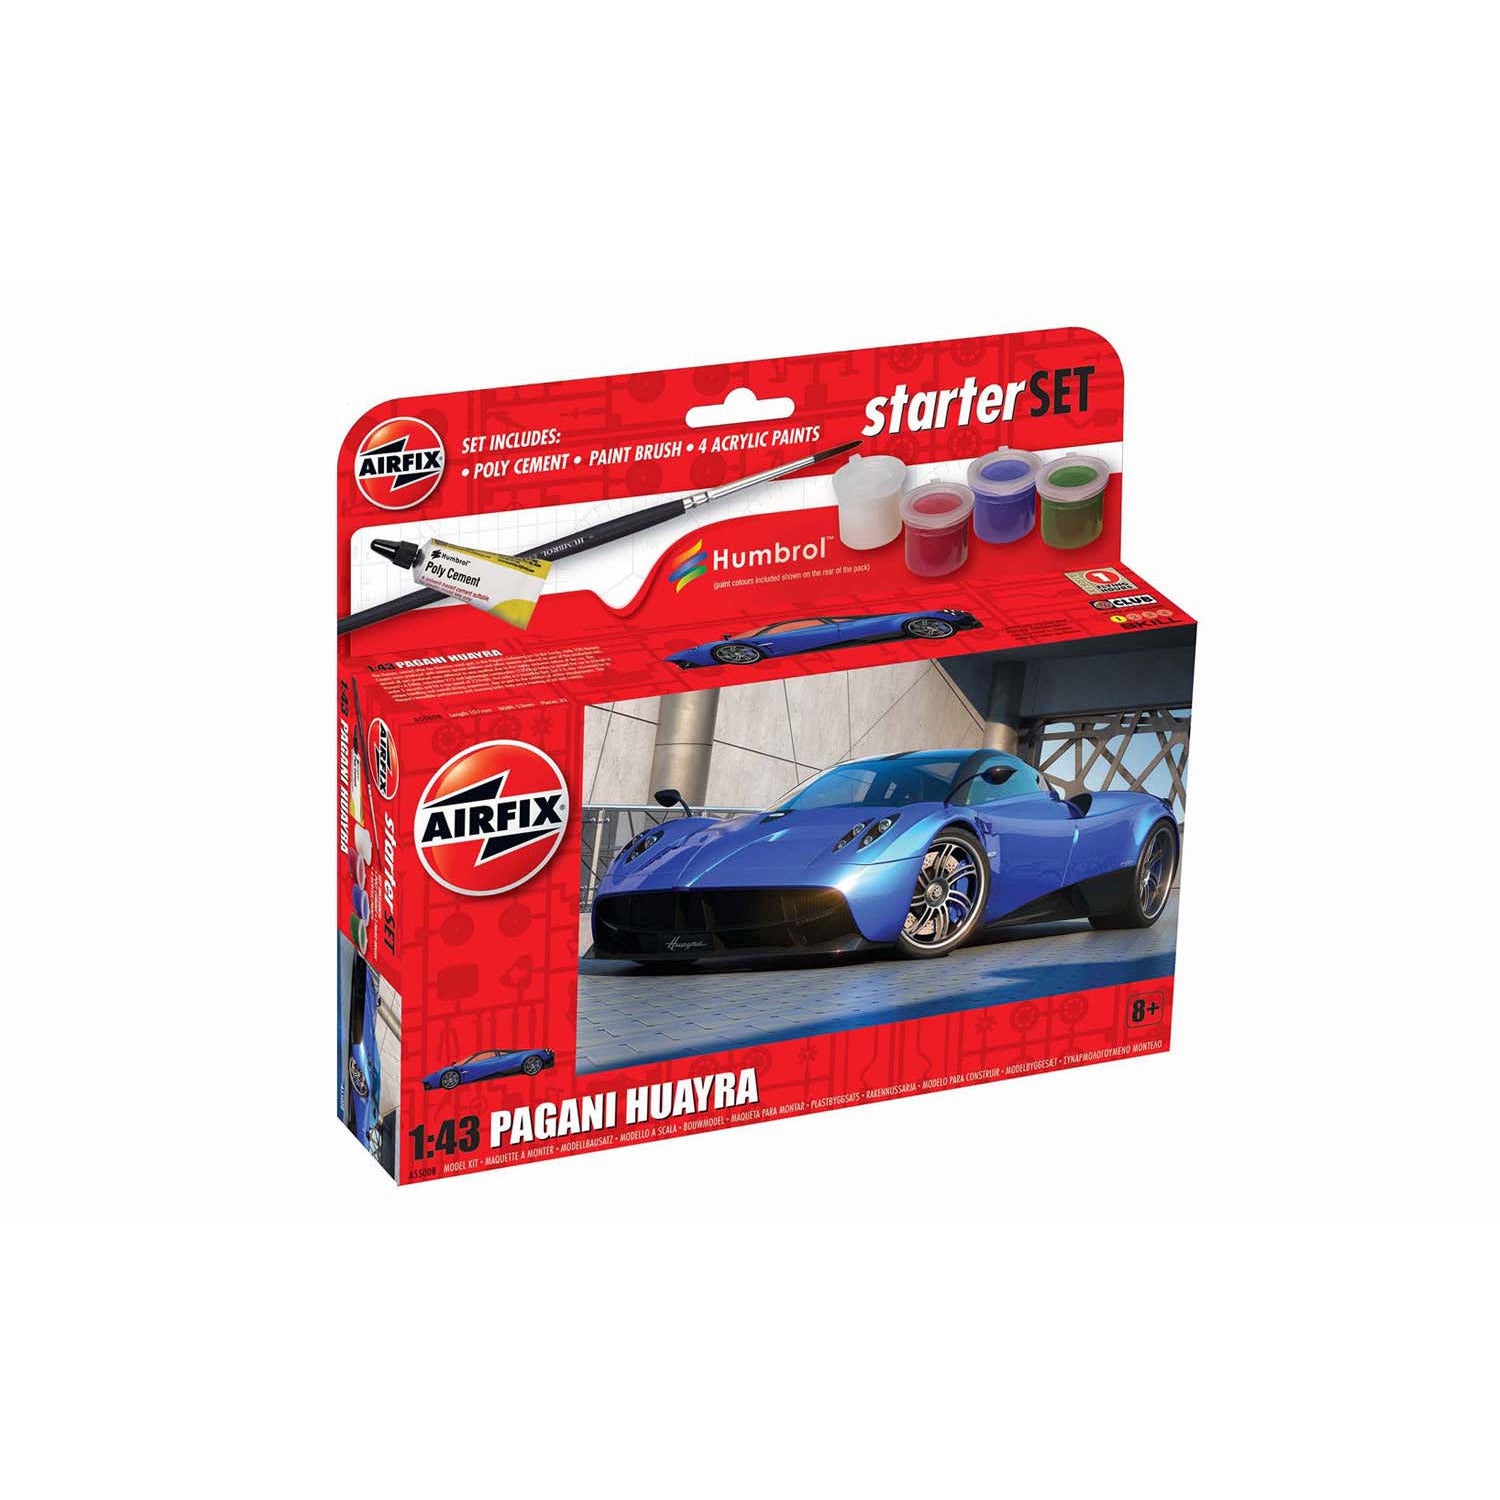 Pagani Huarya Starter Set 1/43 Model Car Kit #55008 by Airfix